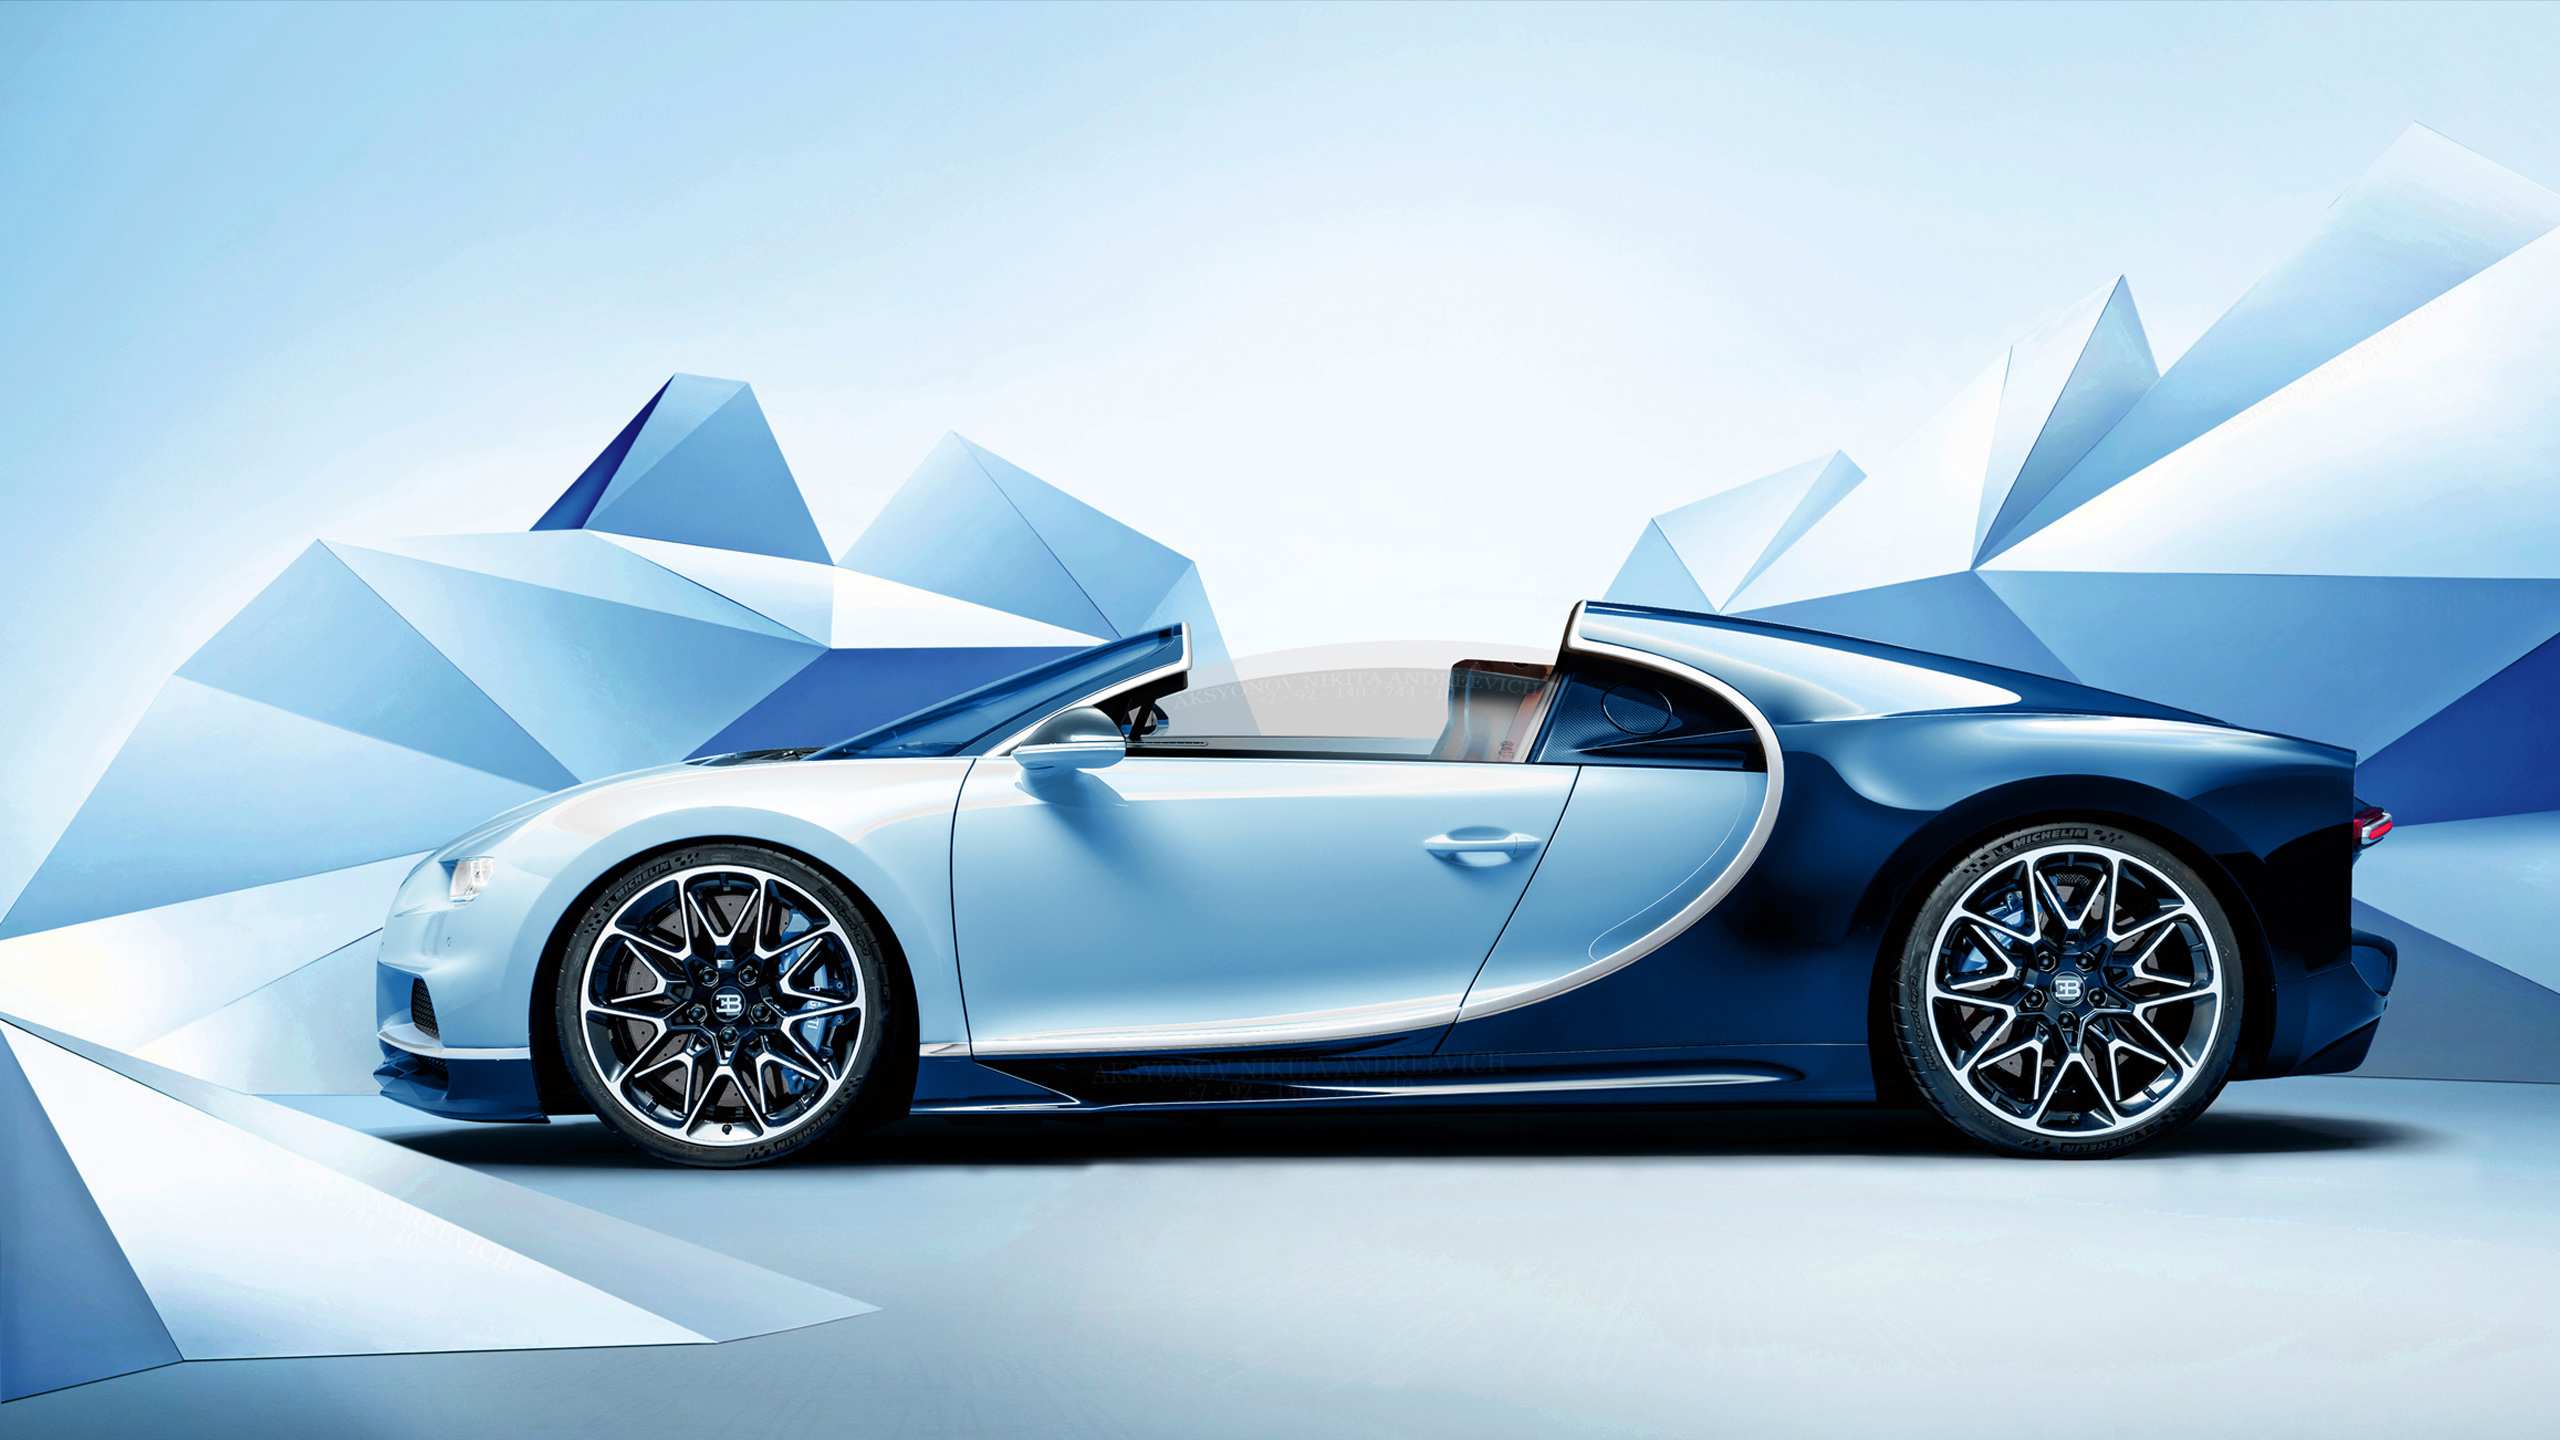 Top, New 54 Bugatti Chiron Roadster wallpaper (Free HD Download)